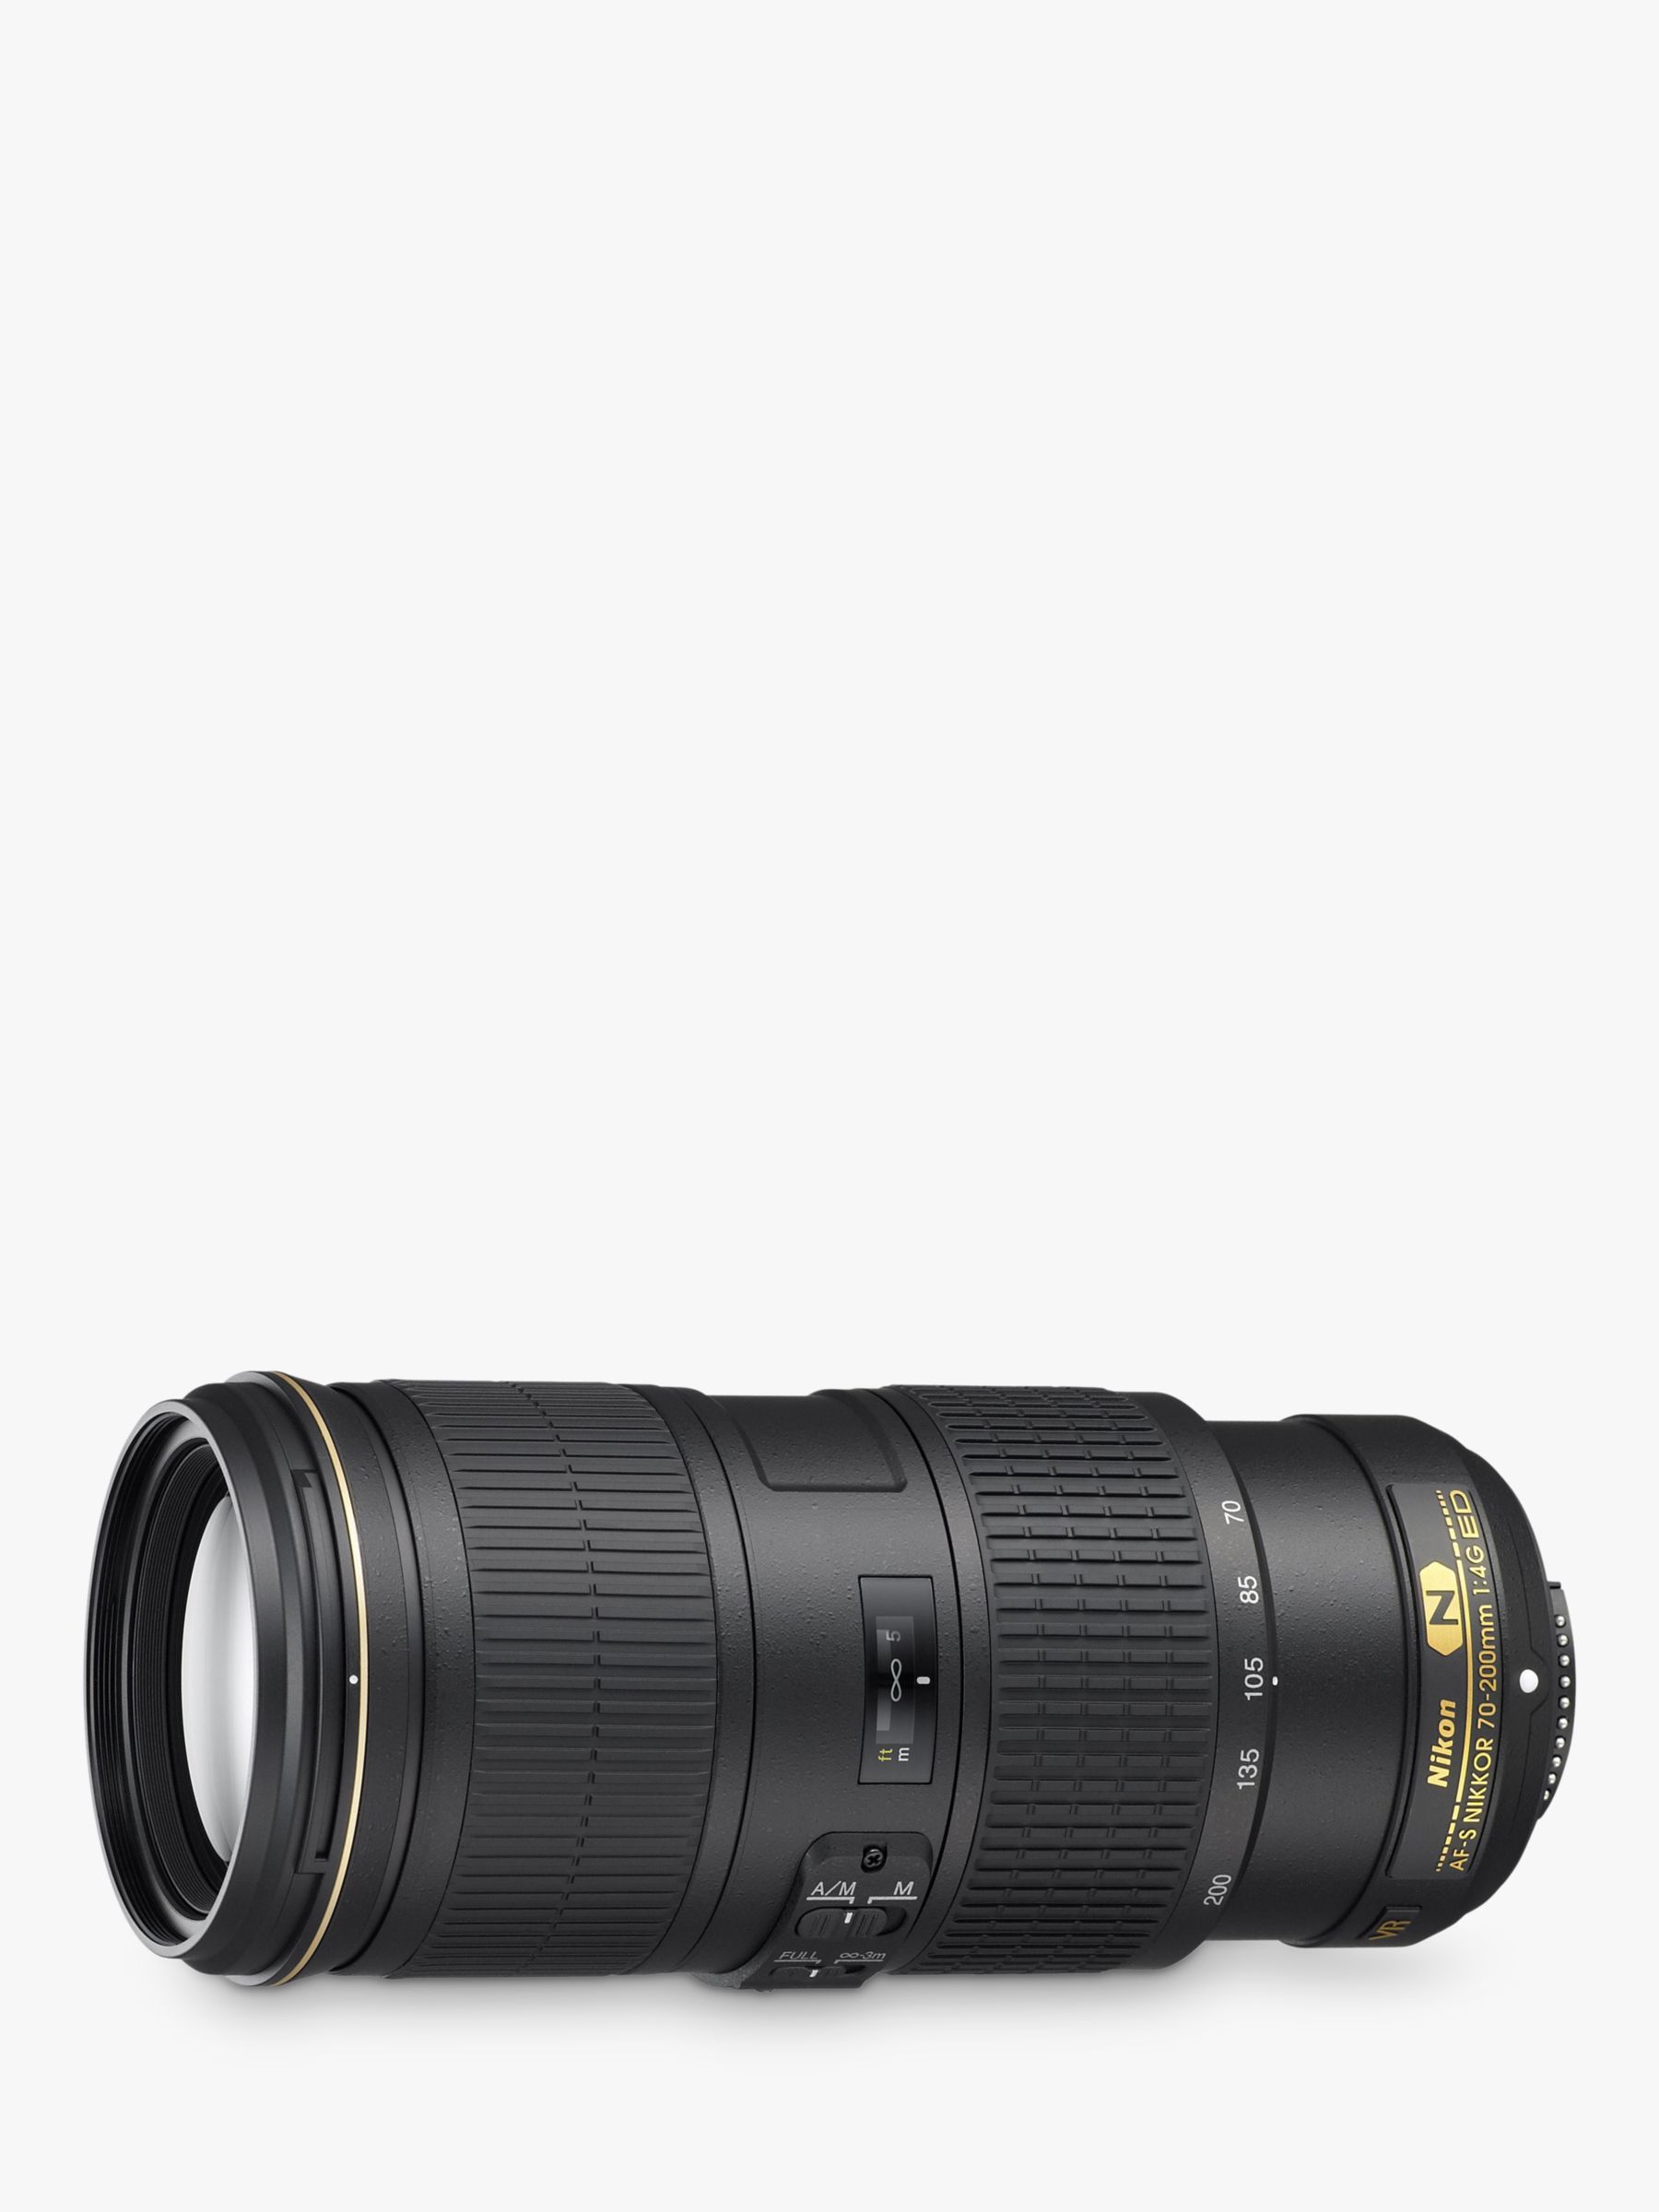 Image of Nikon FX 70200mm f4G ED VR AFS Telephoto Lens